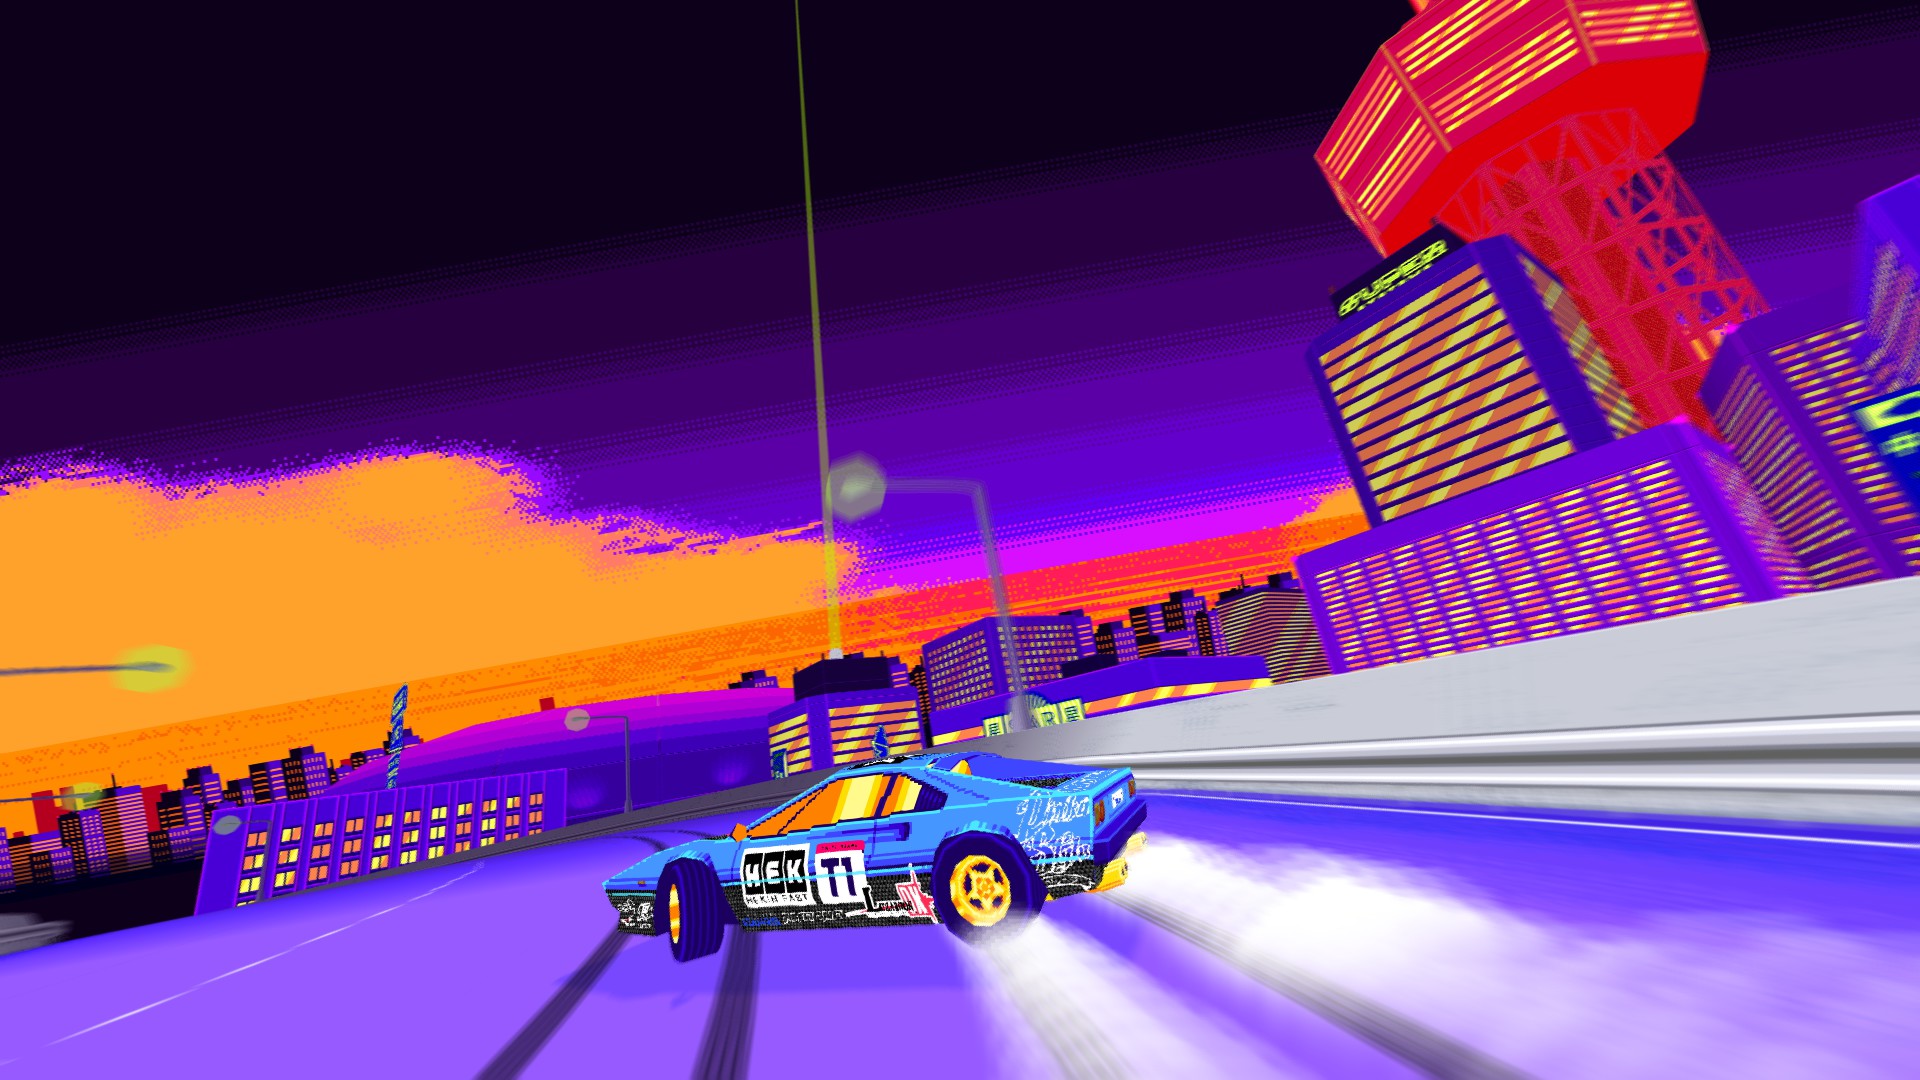 Drift Stage screenshot